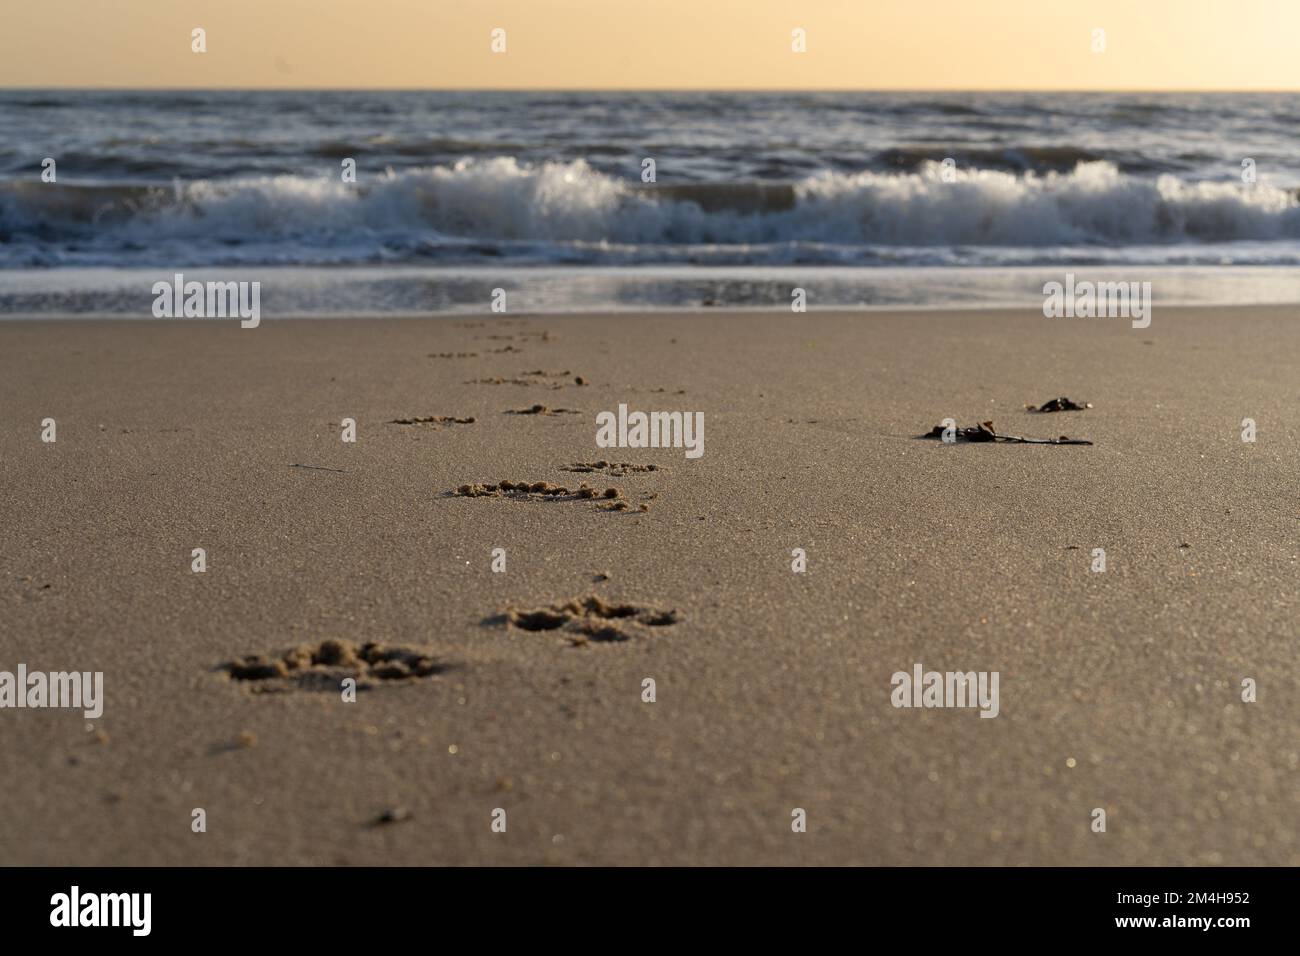 Fußspuren Im Sand Richtung Meer Stockfoto